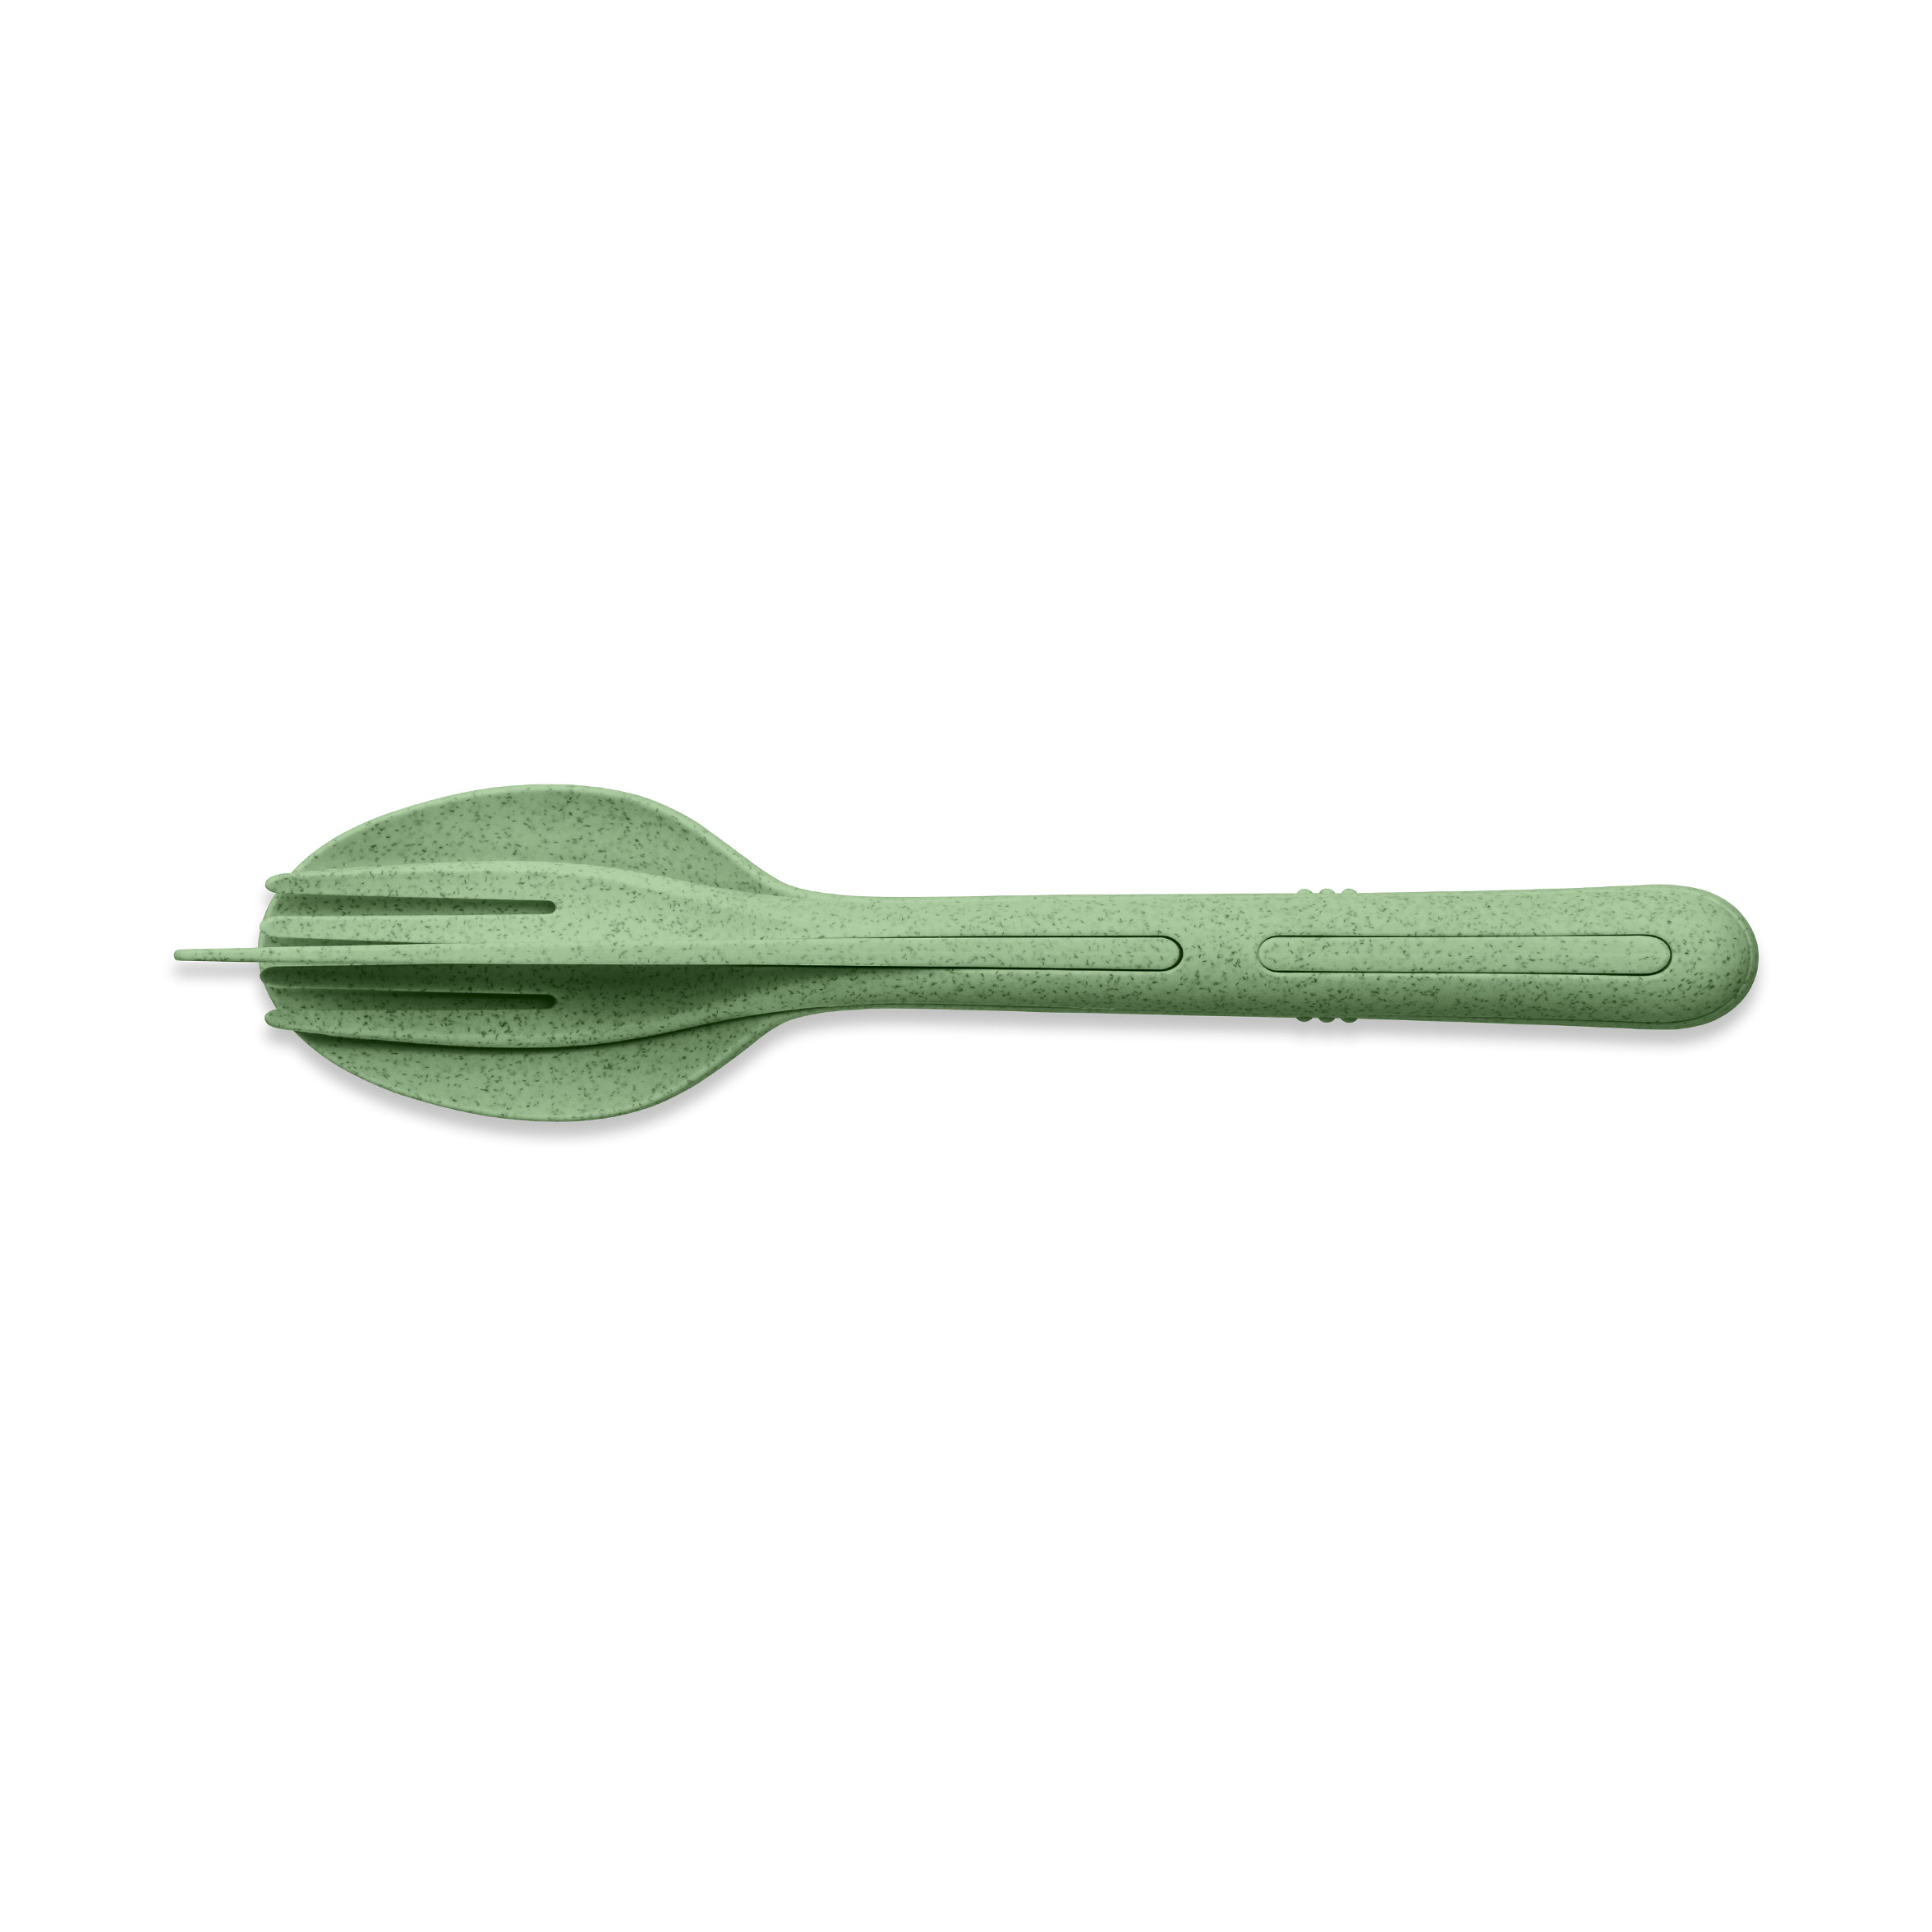 https://www.nordicnest.com/assets/blobs/koziol-klikk-cutlery-3-pieces-natural-leaf-green/584554-01_1_ProductImageMain-74daa96a4b.png